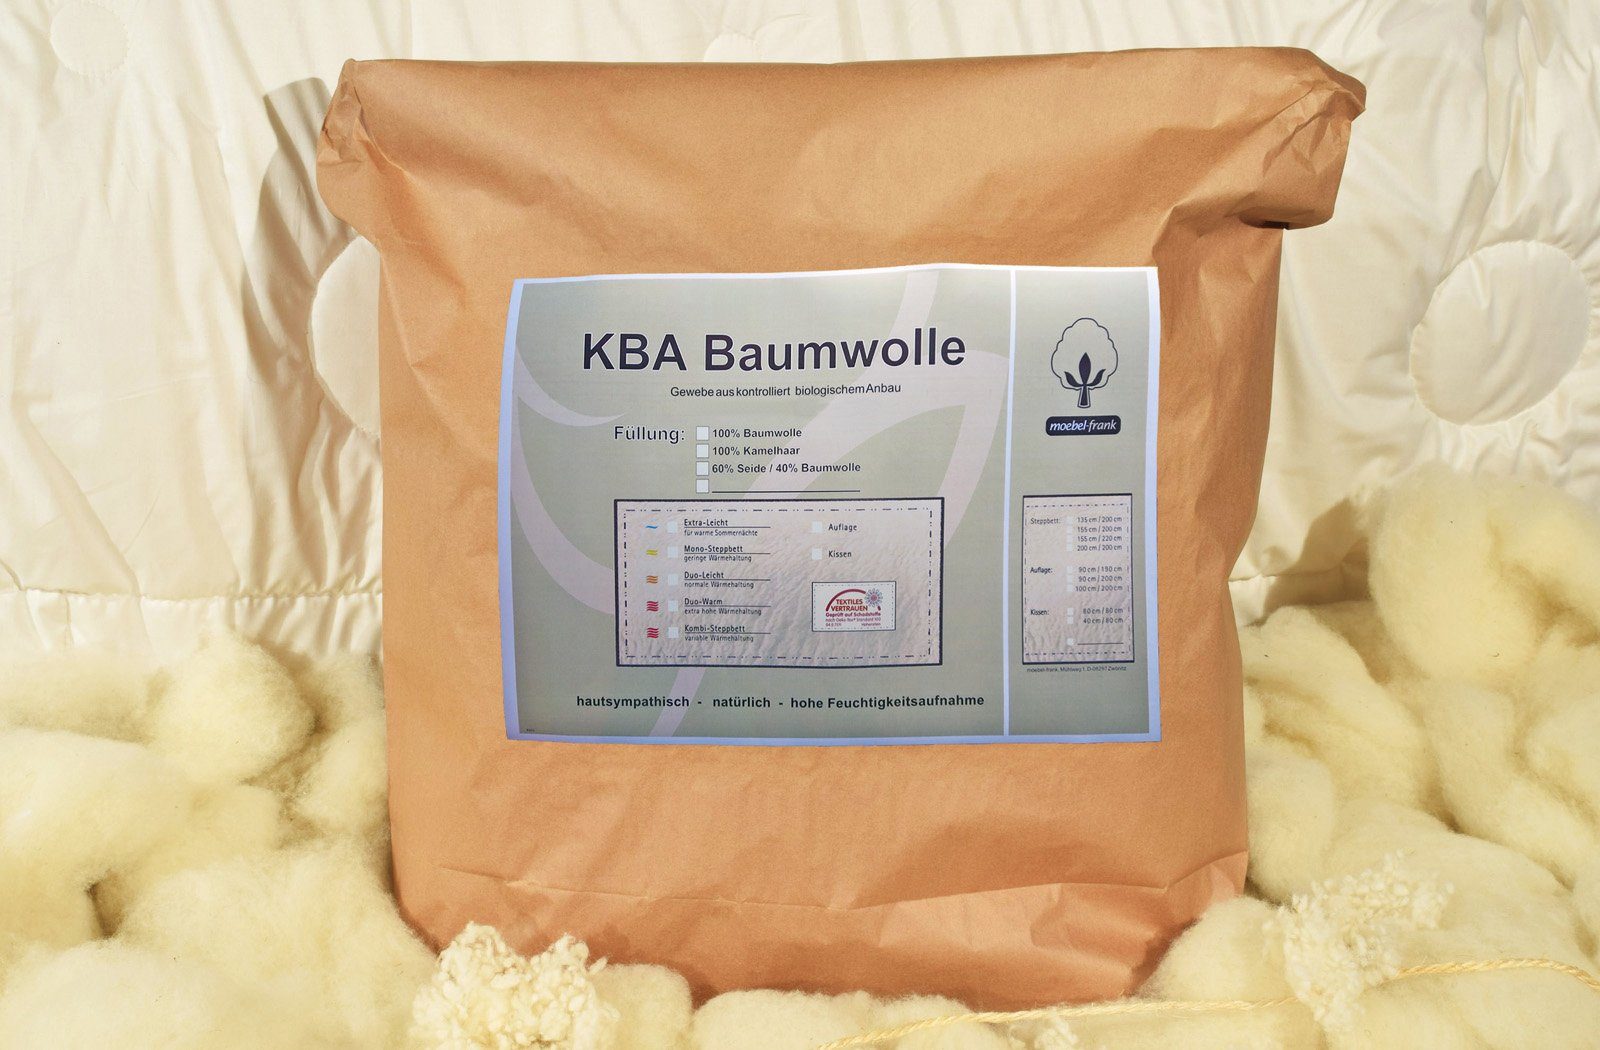 100% Füllung: franknatur, Baumwolle 100% kbA, Bezug: kbA, Sommer-Bettdecke Baumwollbettdecke, Nancy, Baumwolle leichte